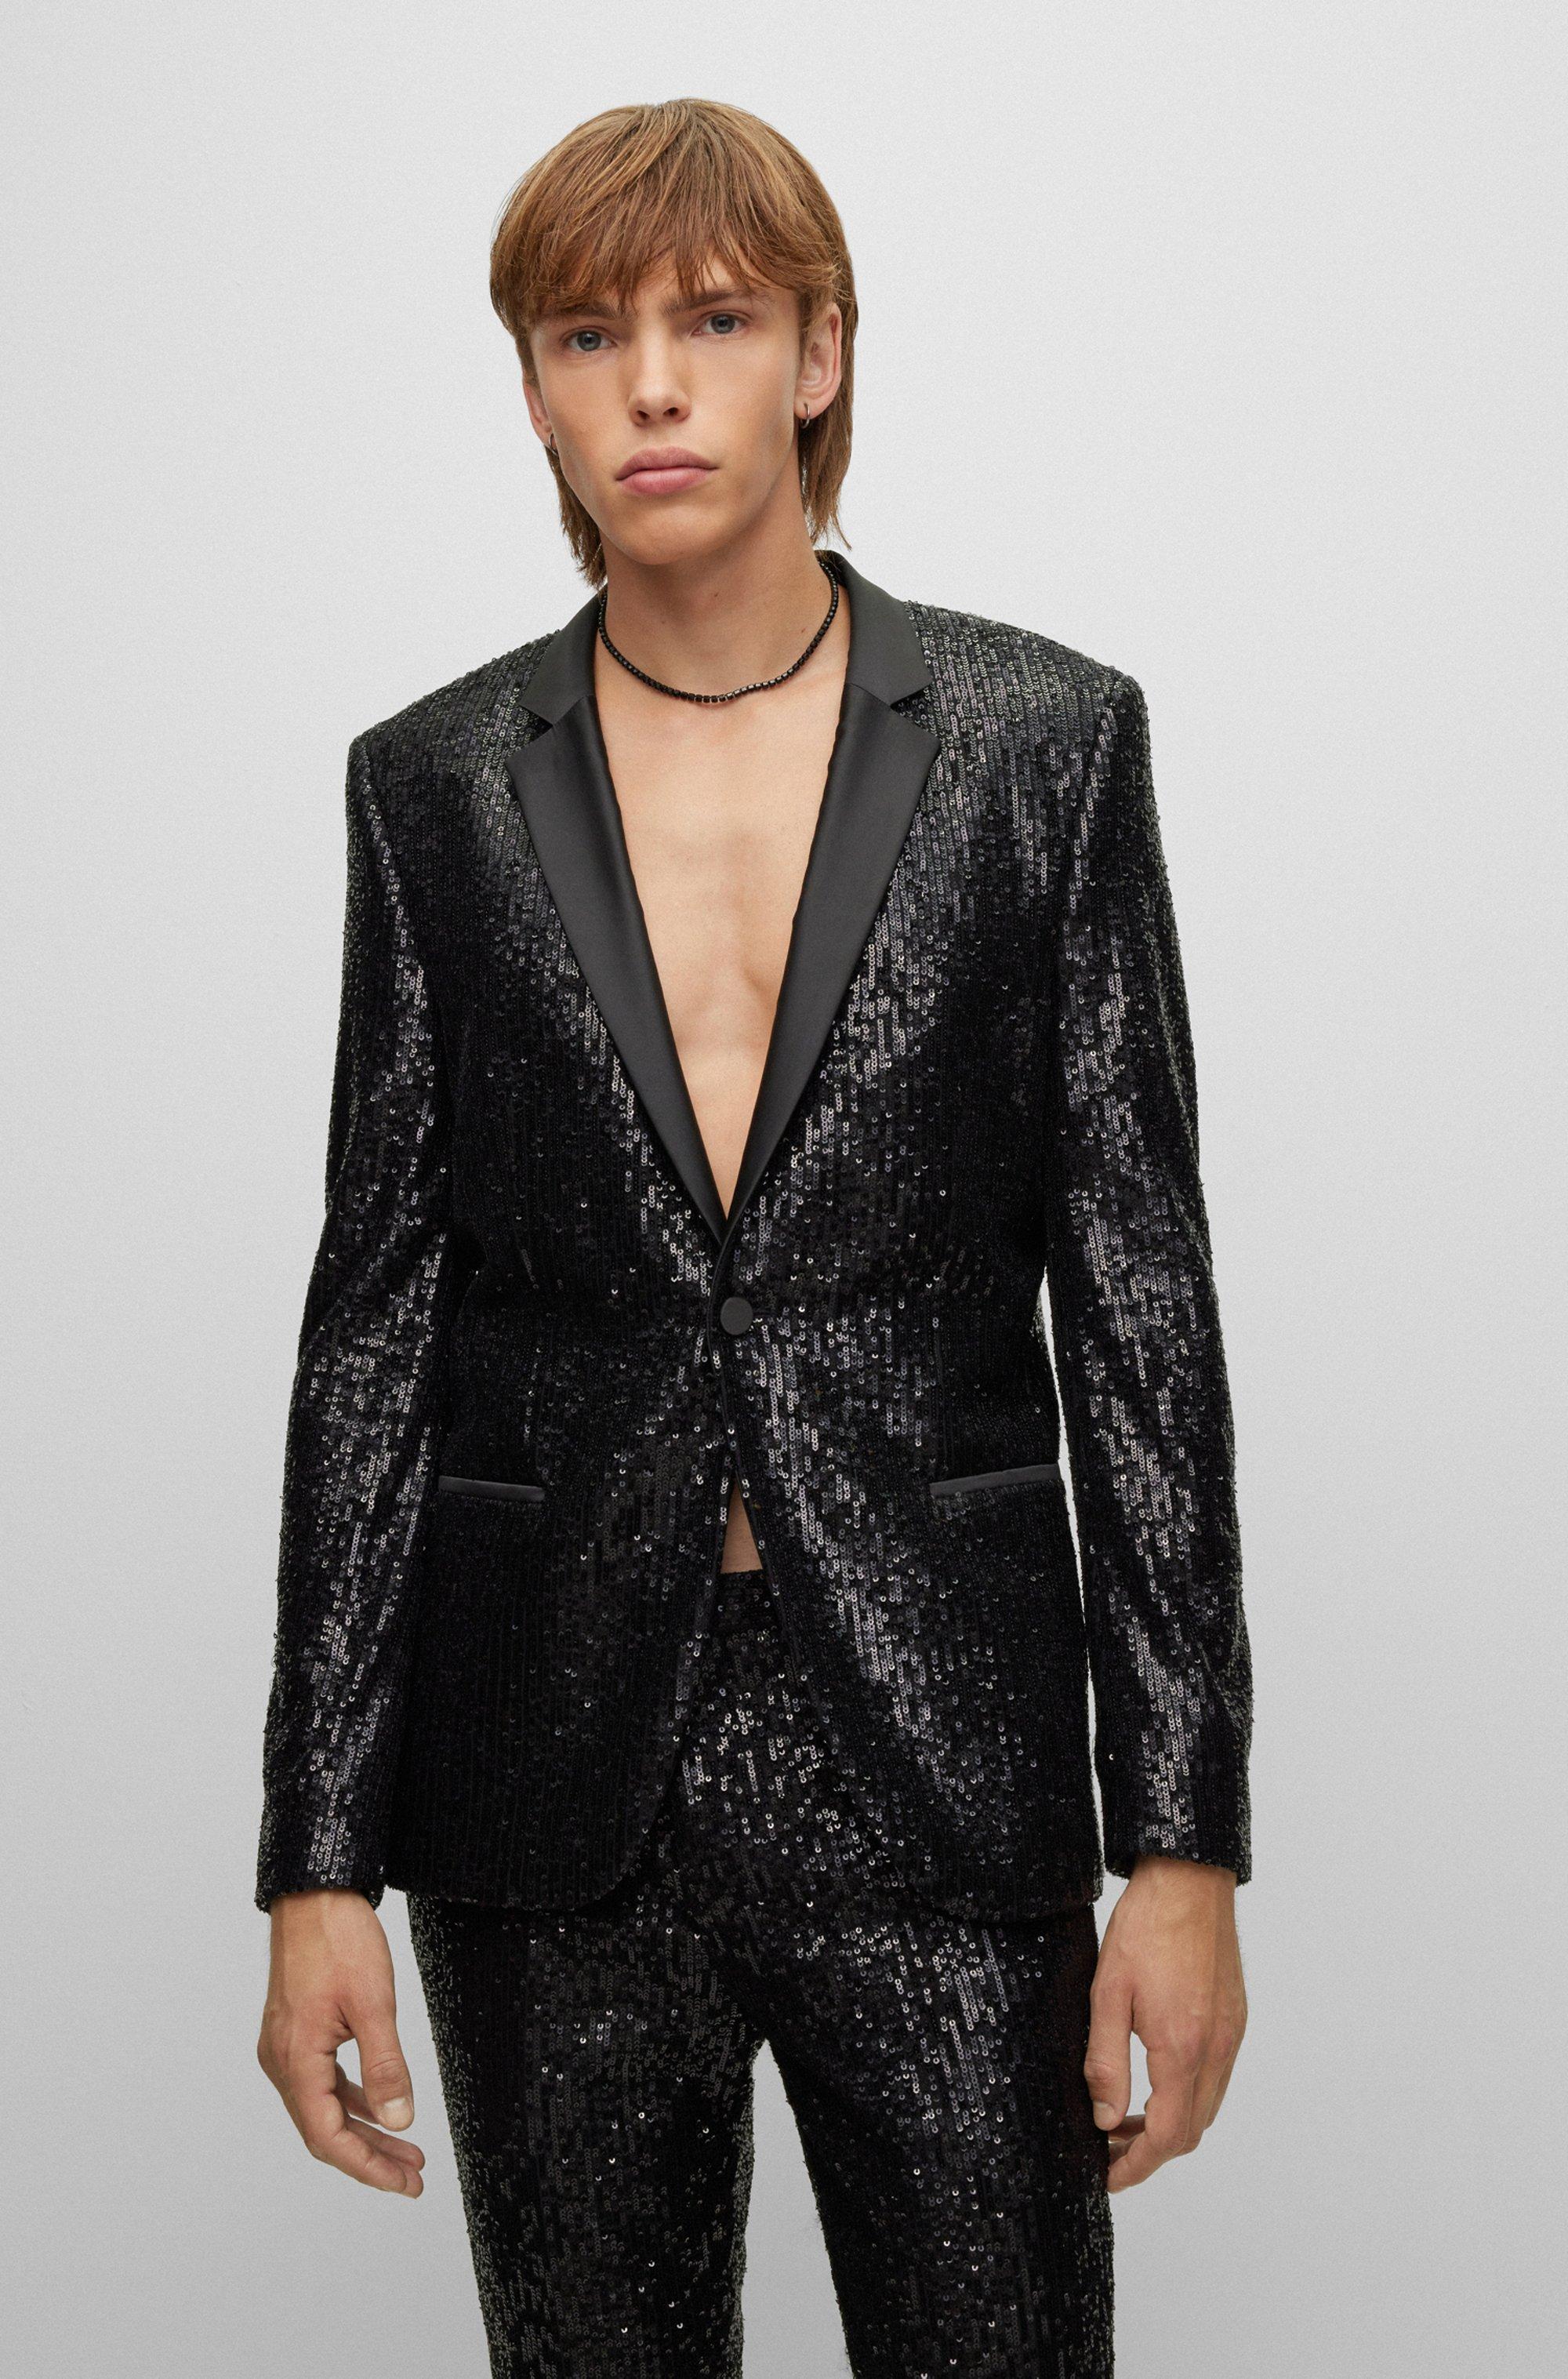 BOSS by HUGO BOSS Sequined Tuxedo Jacket Slim Fit in Black for Men | Lyst